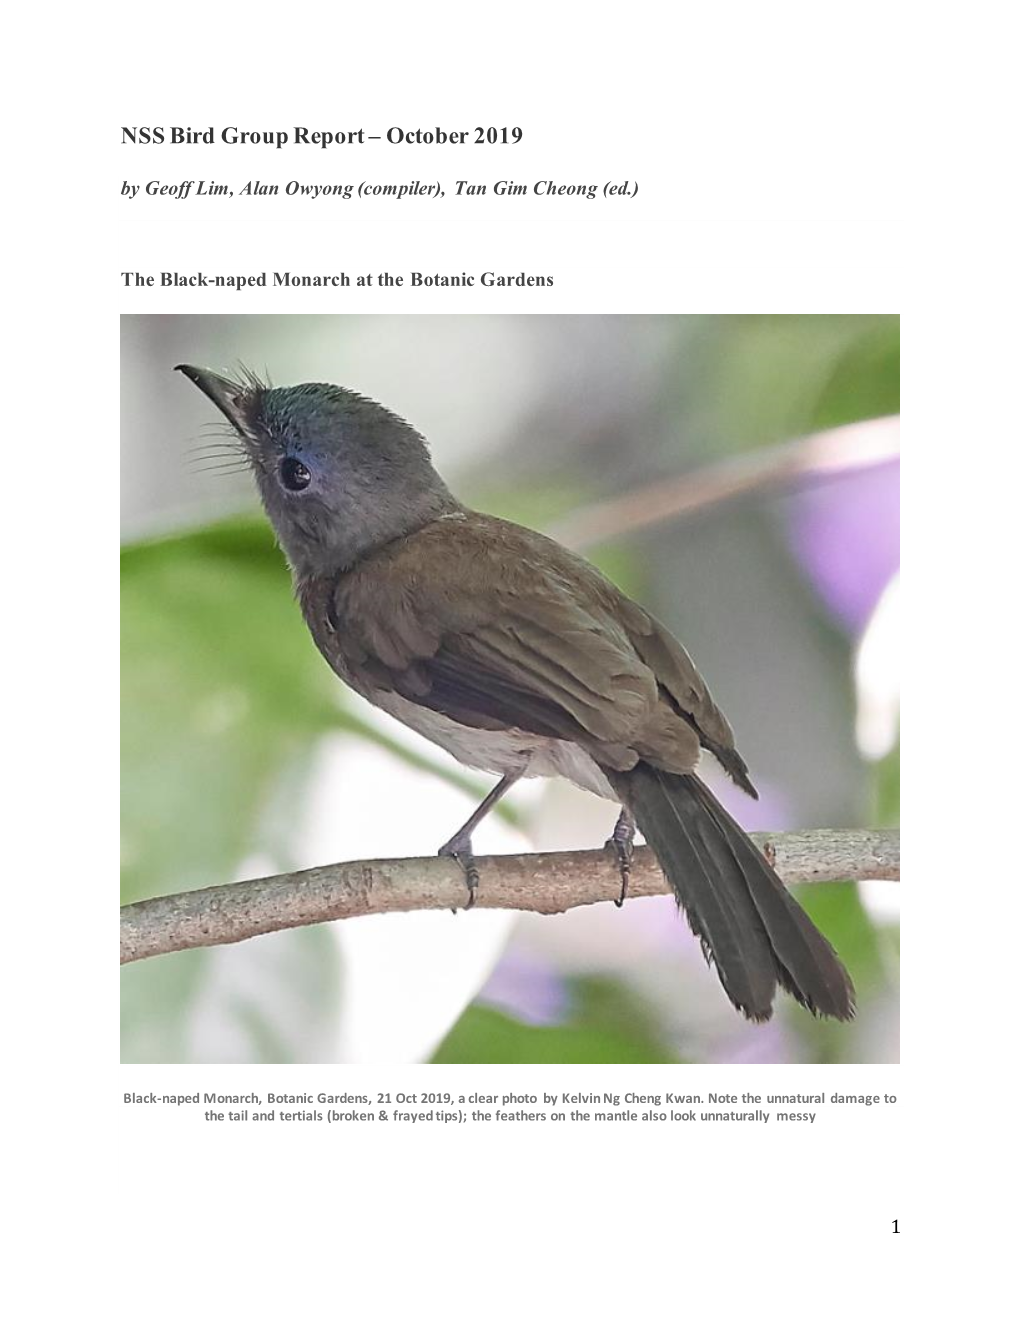 NSS Bird Group Report – October 2019 by Geoff Lim, Alan Owyong (Compiler), Tan Gim Cheong (Ed.)